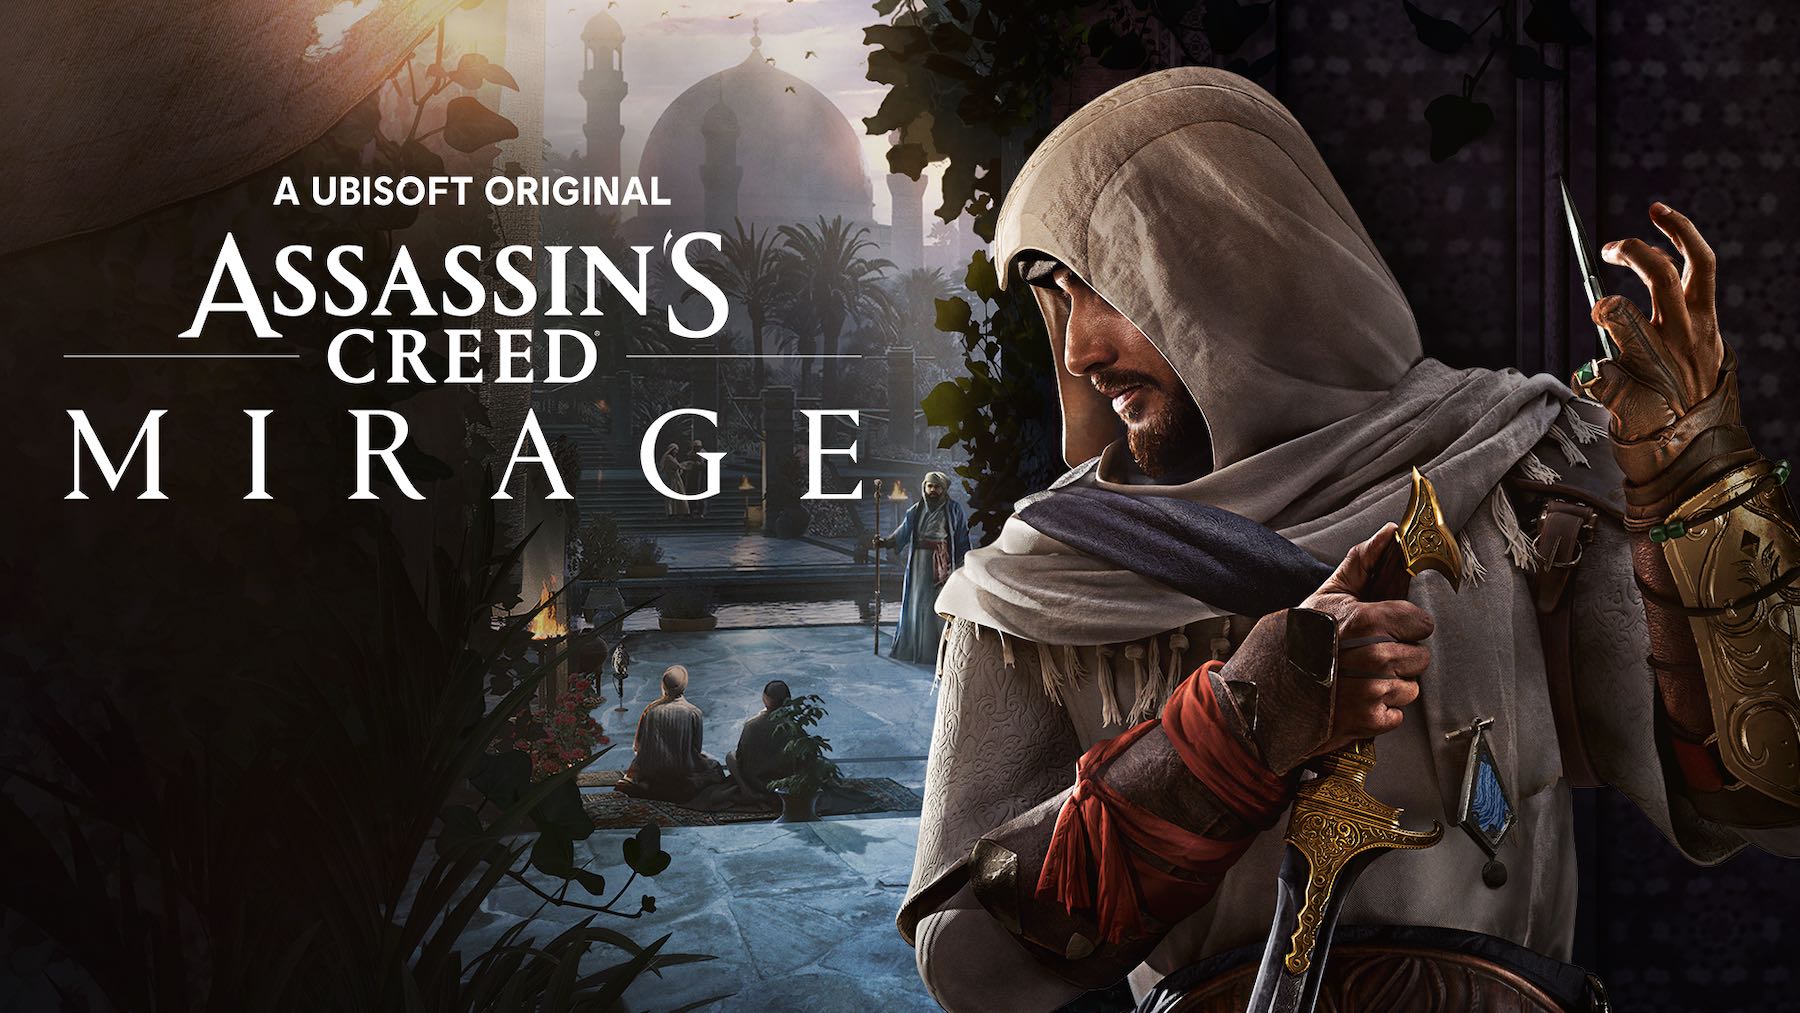 Assassin's Creed bundles up its American saga for October